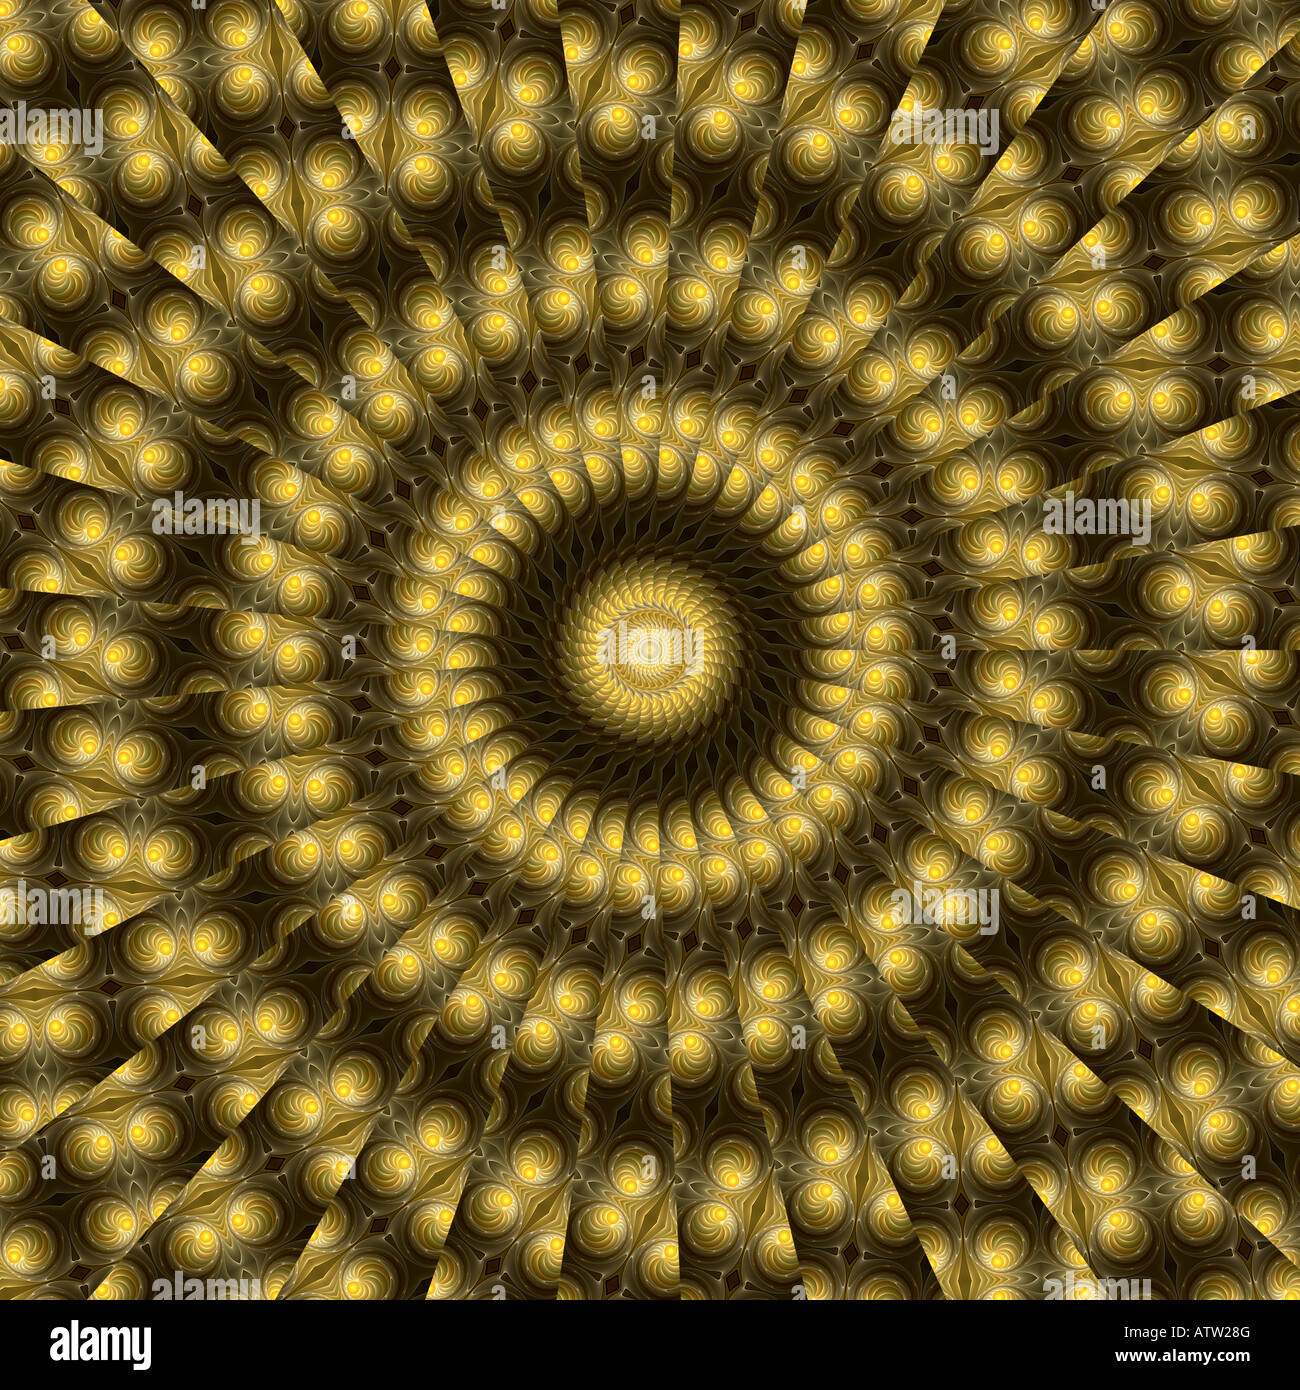 Abstract fractal image resembling a golden spiral keleidoscope Stock Photo